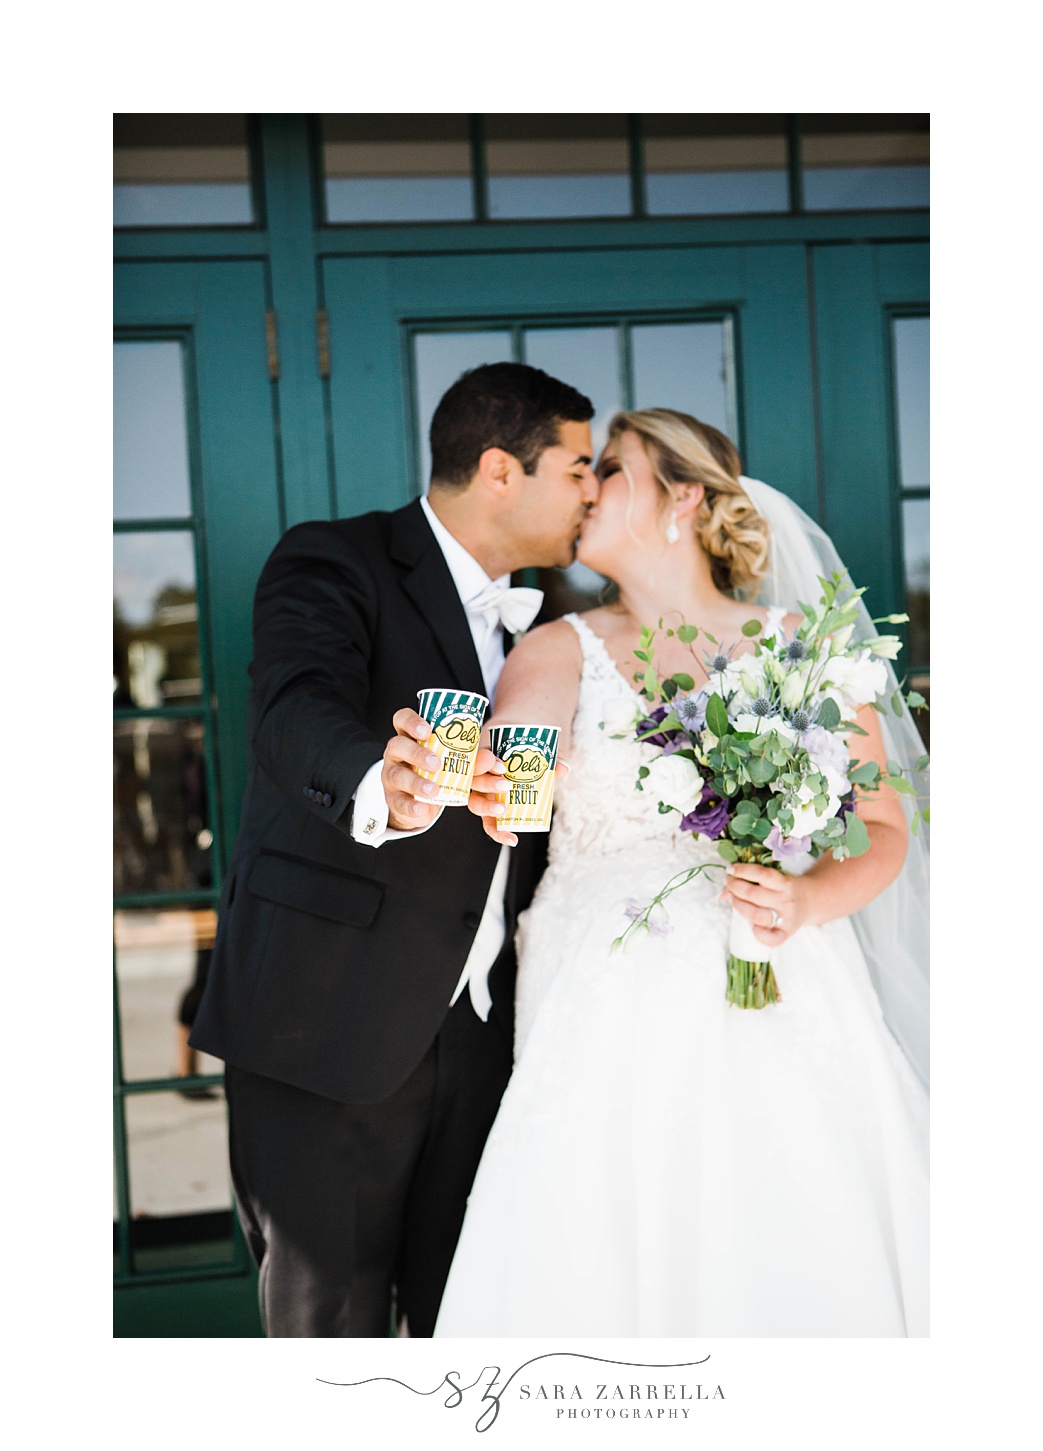 newlyweds kiss holding Del's Lemonade